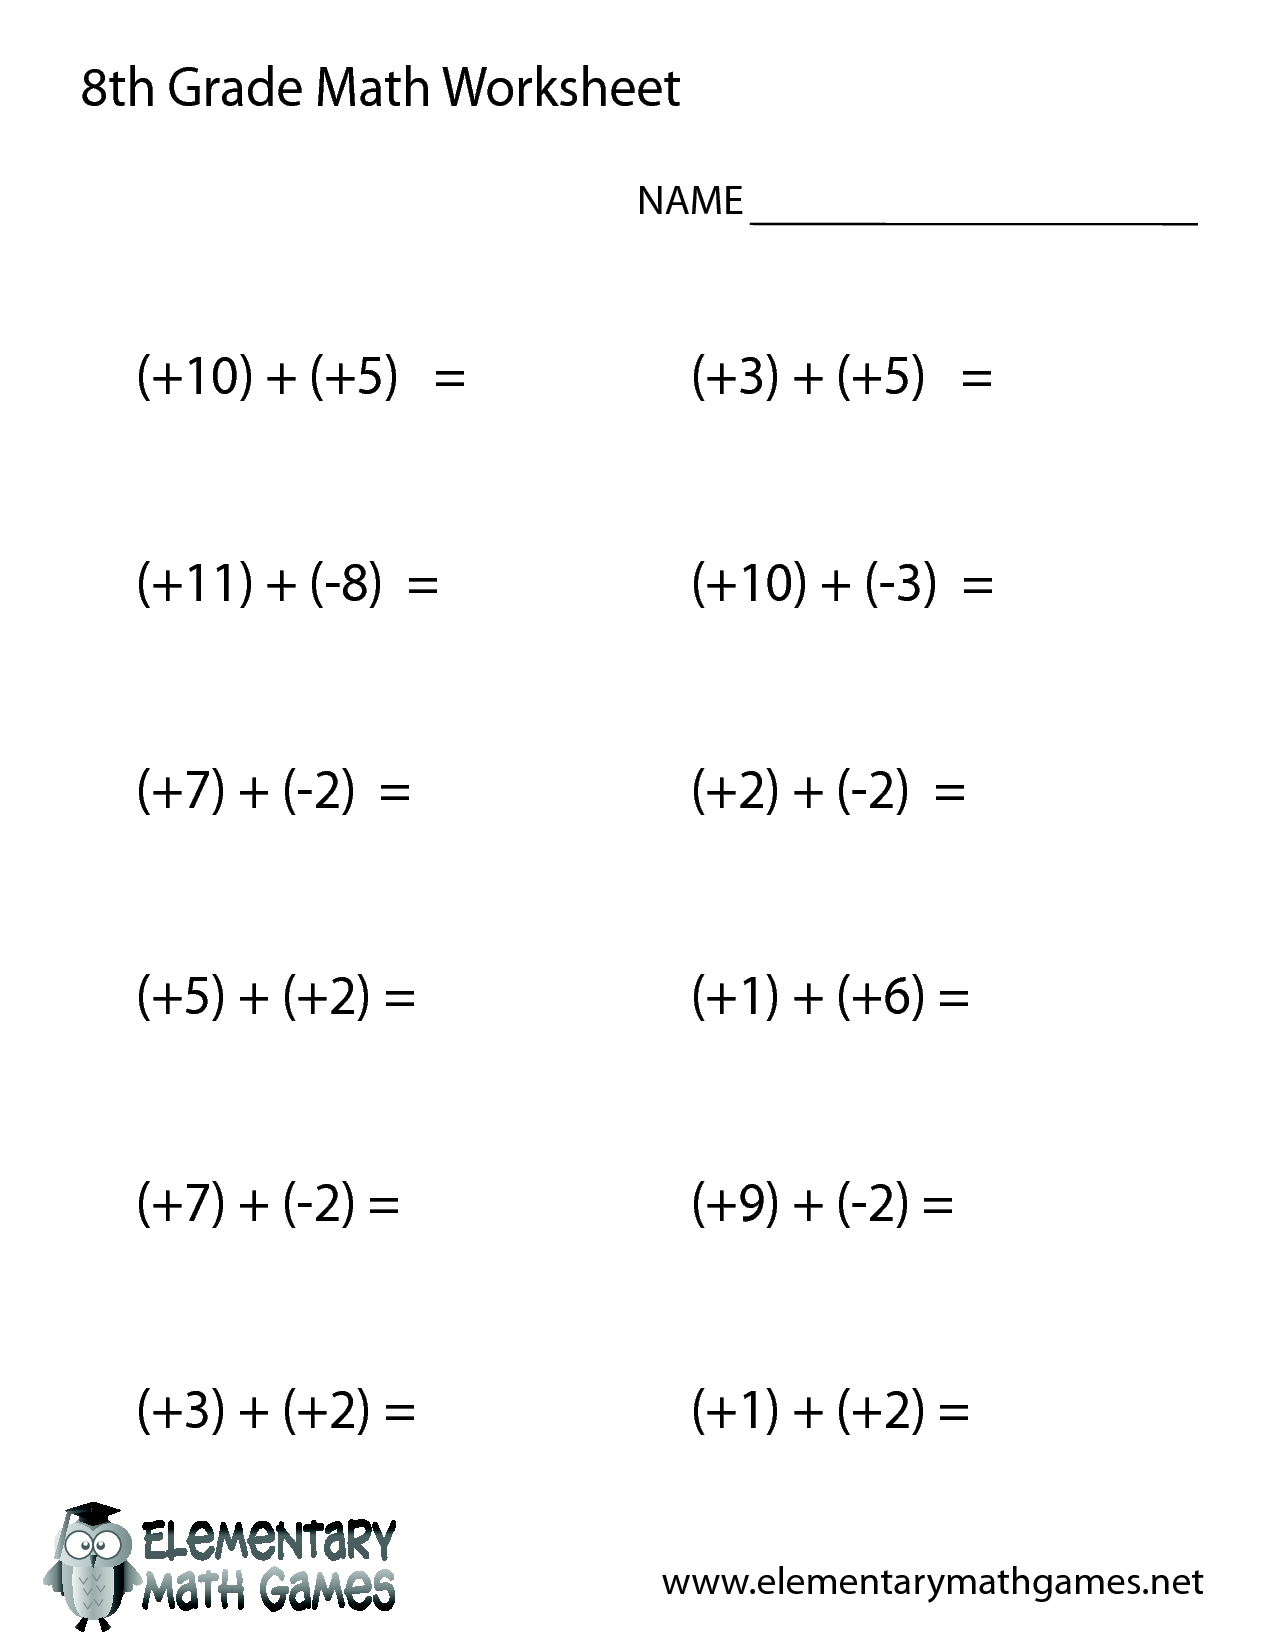 8th grade math worksheets printable free_232727